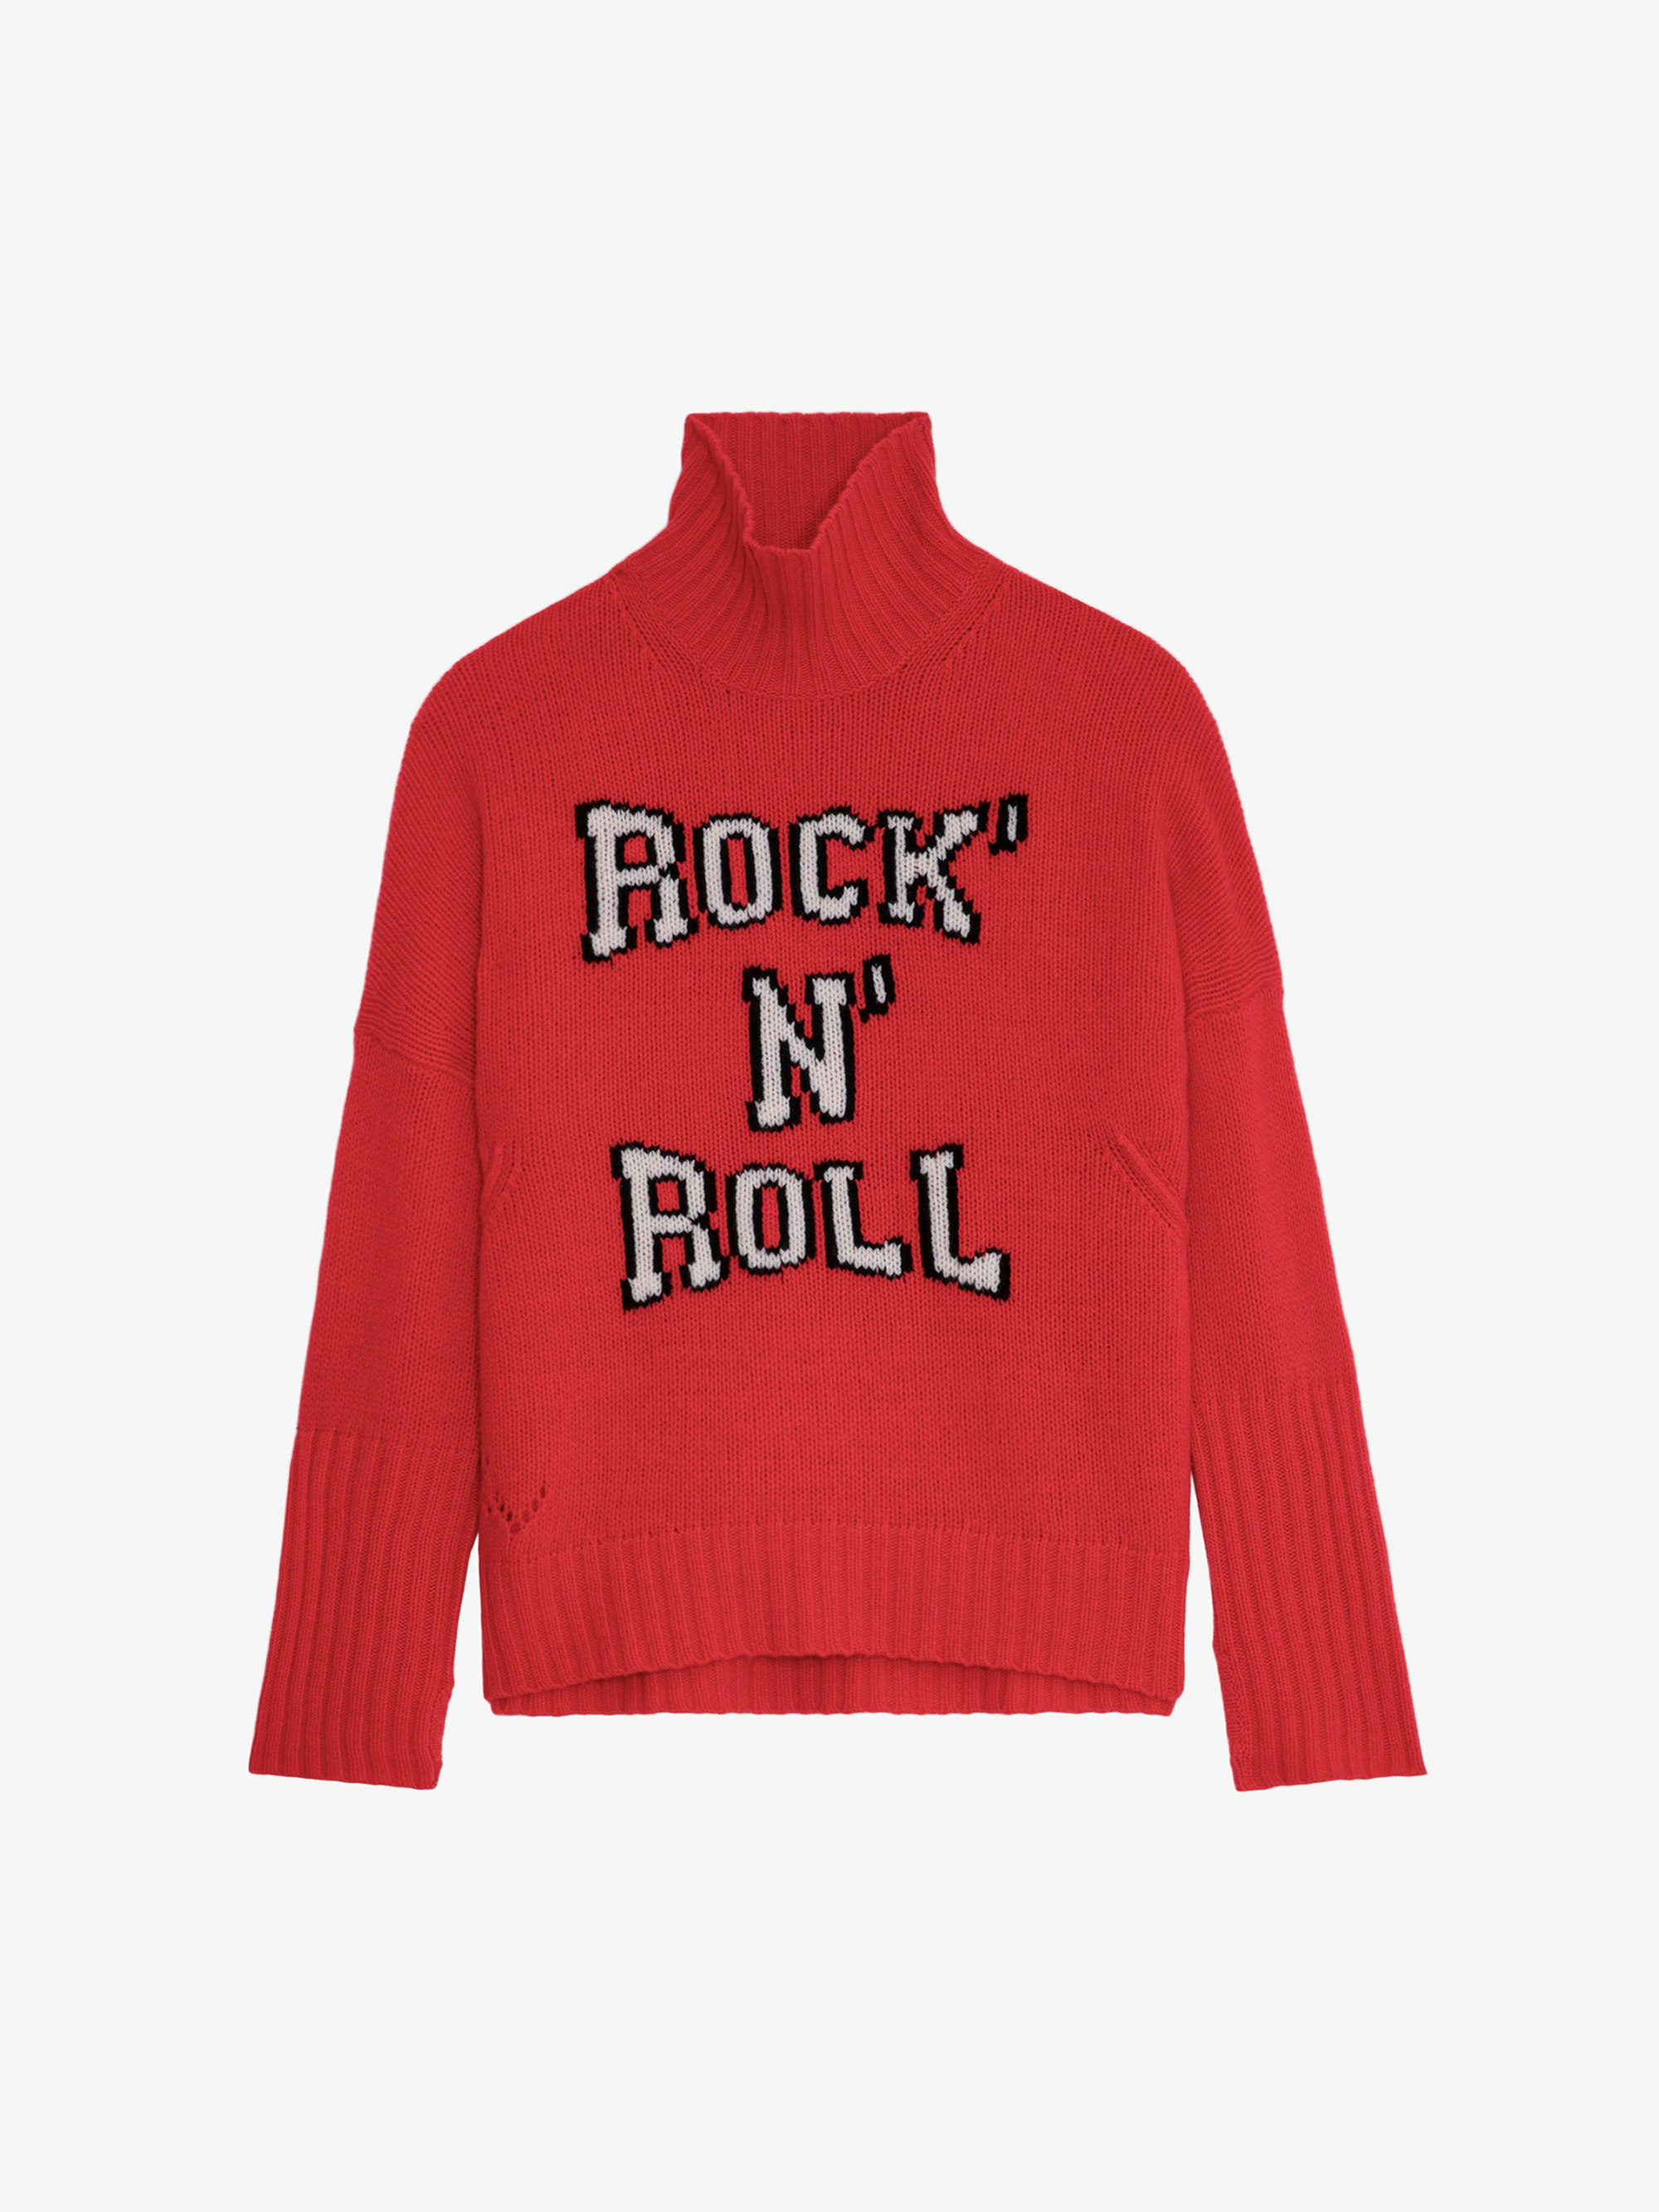 Pull Alma Rock N Roll - Pull en laine mérinos rouge à col montant et inscription "Rock' N' Roll" en jacquard intarsia.